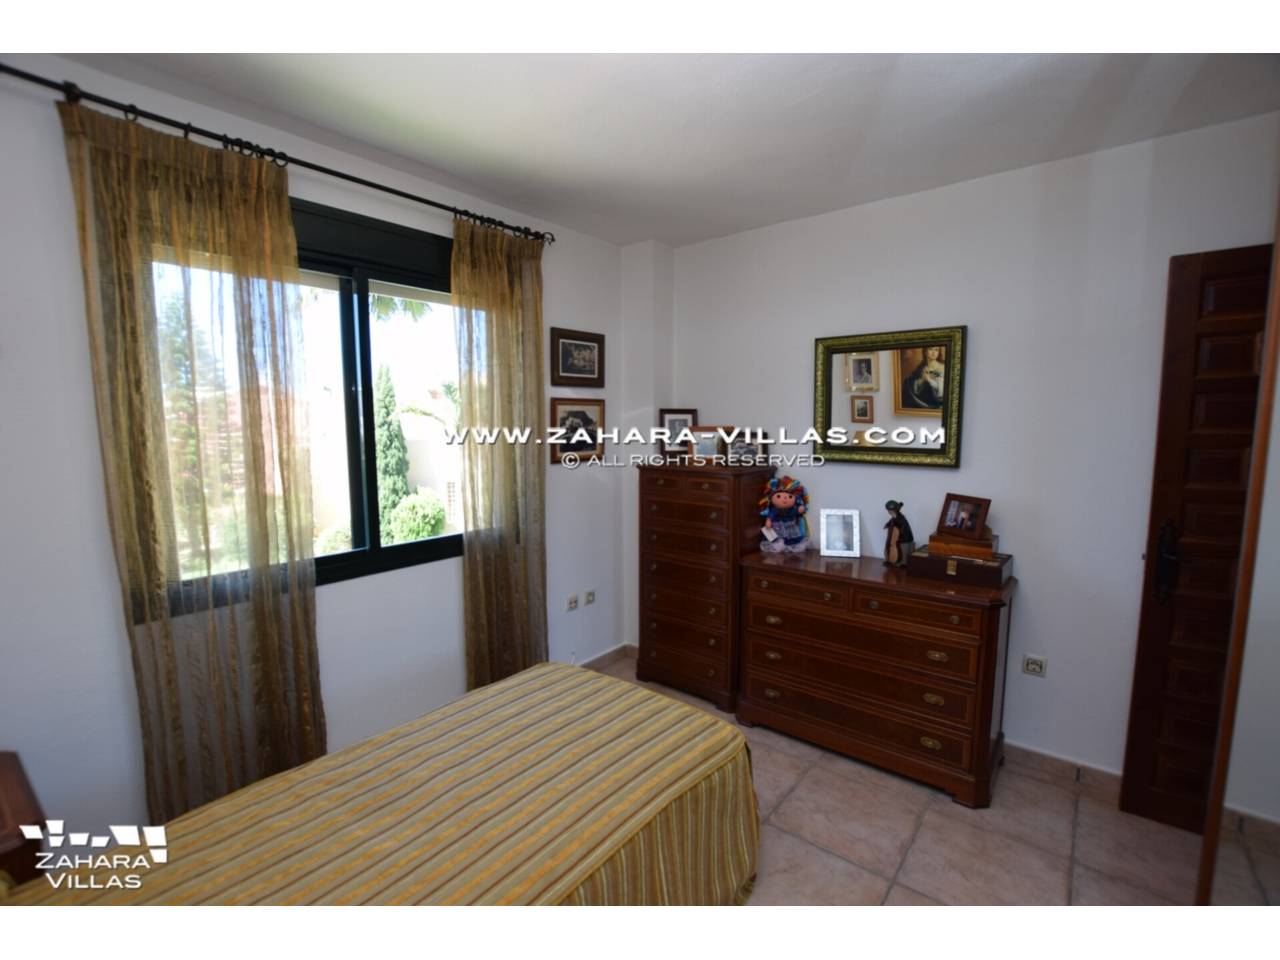 Imagen 27 de Apartment for sale in residential Jardines de Zahara - Atlanterra